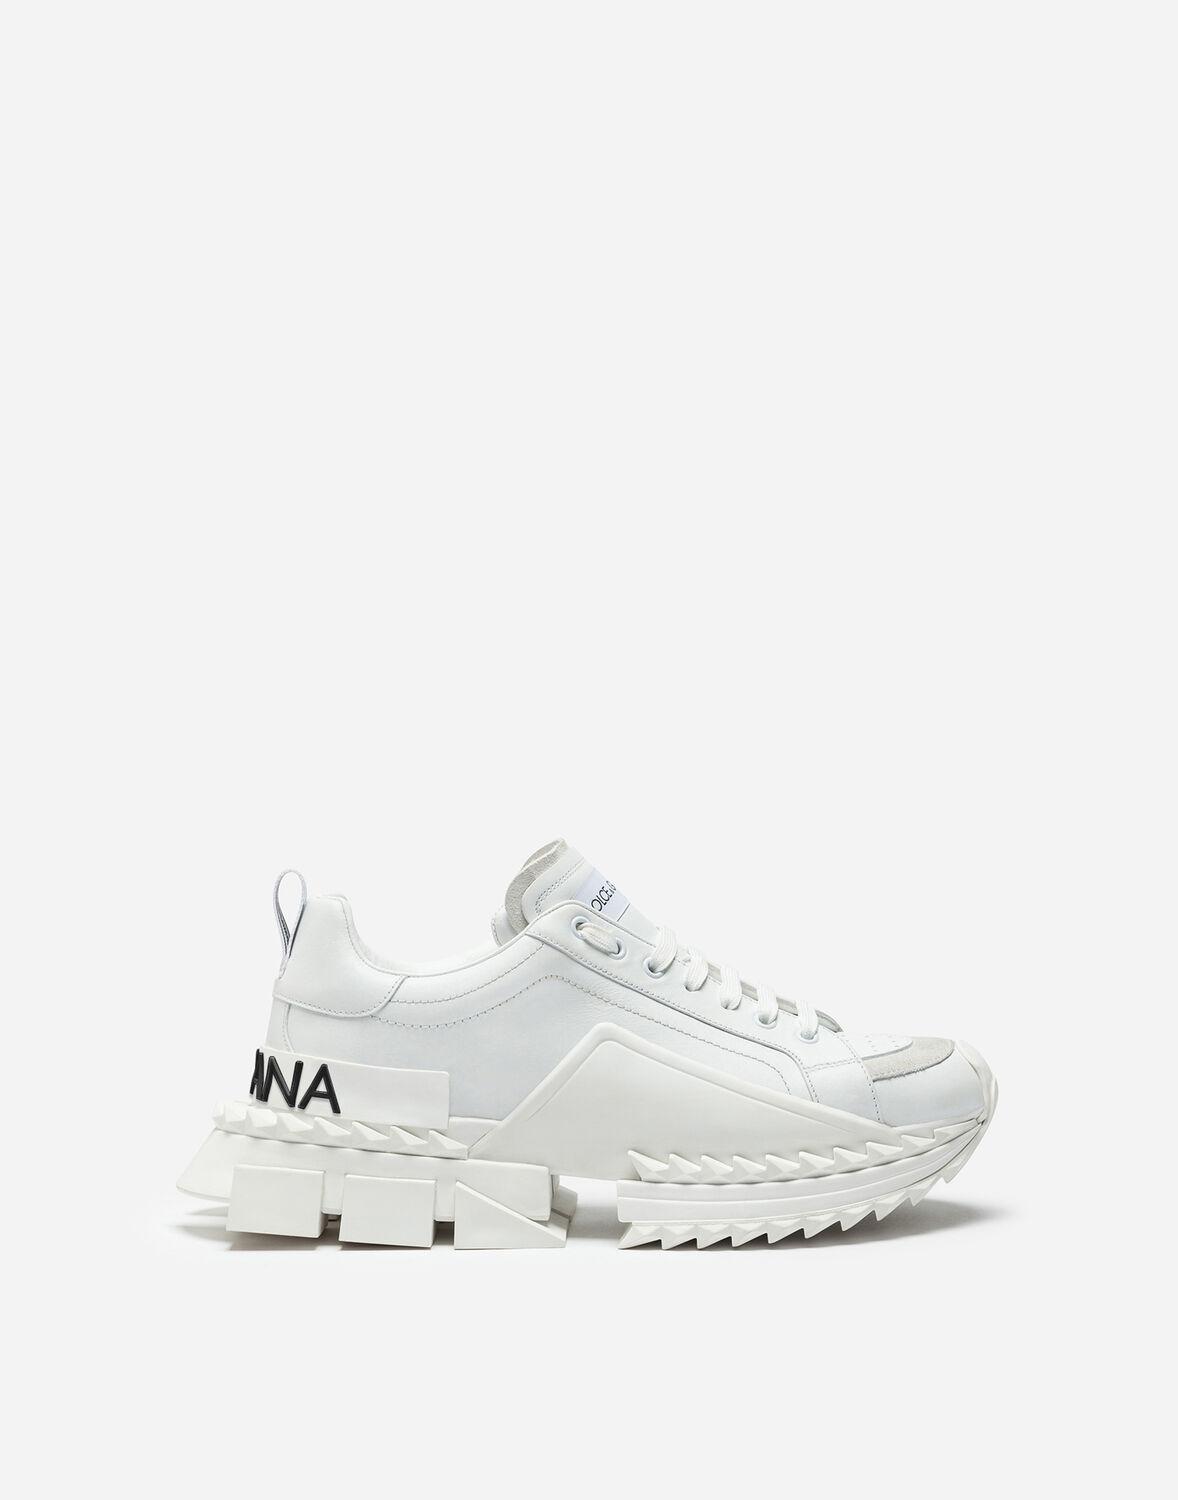 Lift idee oogsten Dolce & Gabbana Super Queen Sneakers In Calfskin in White | Lyst